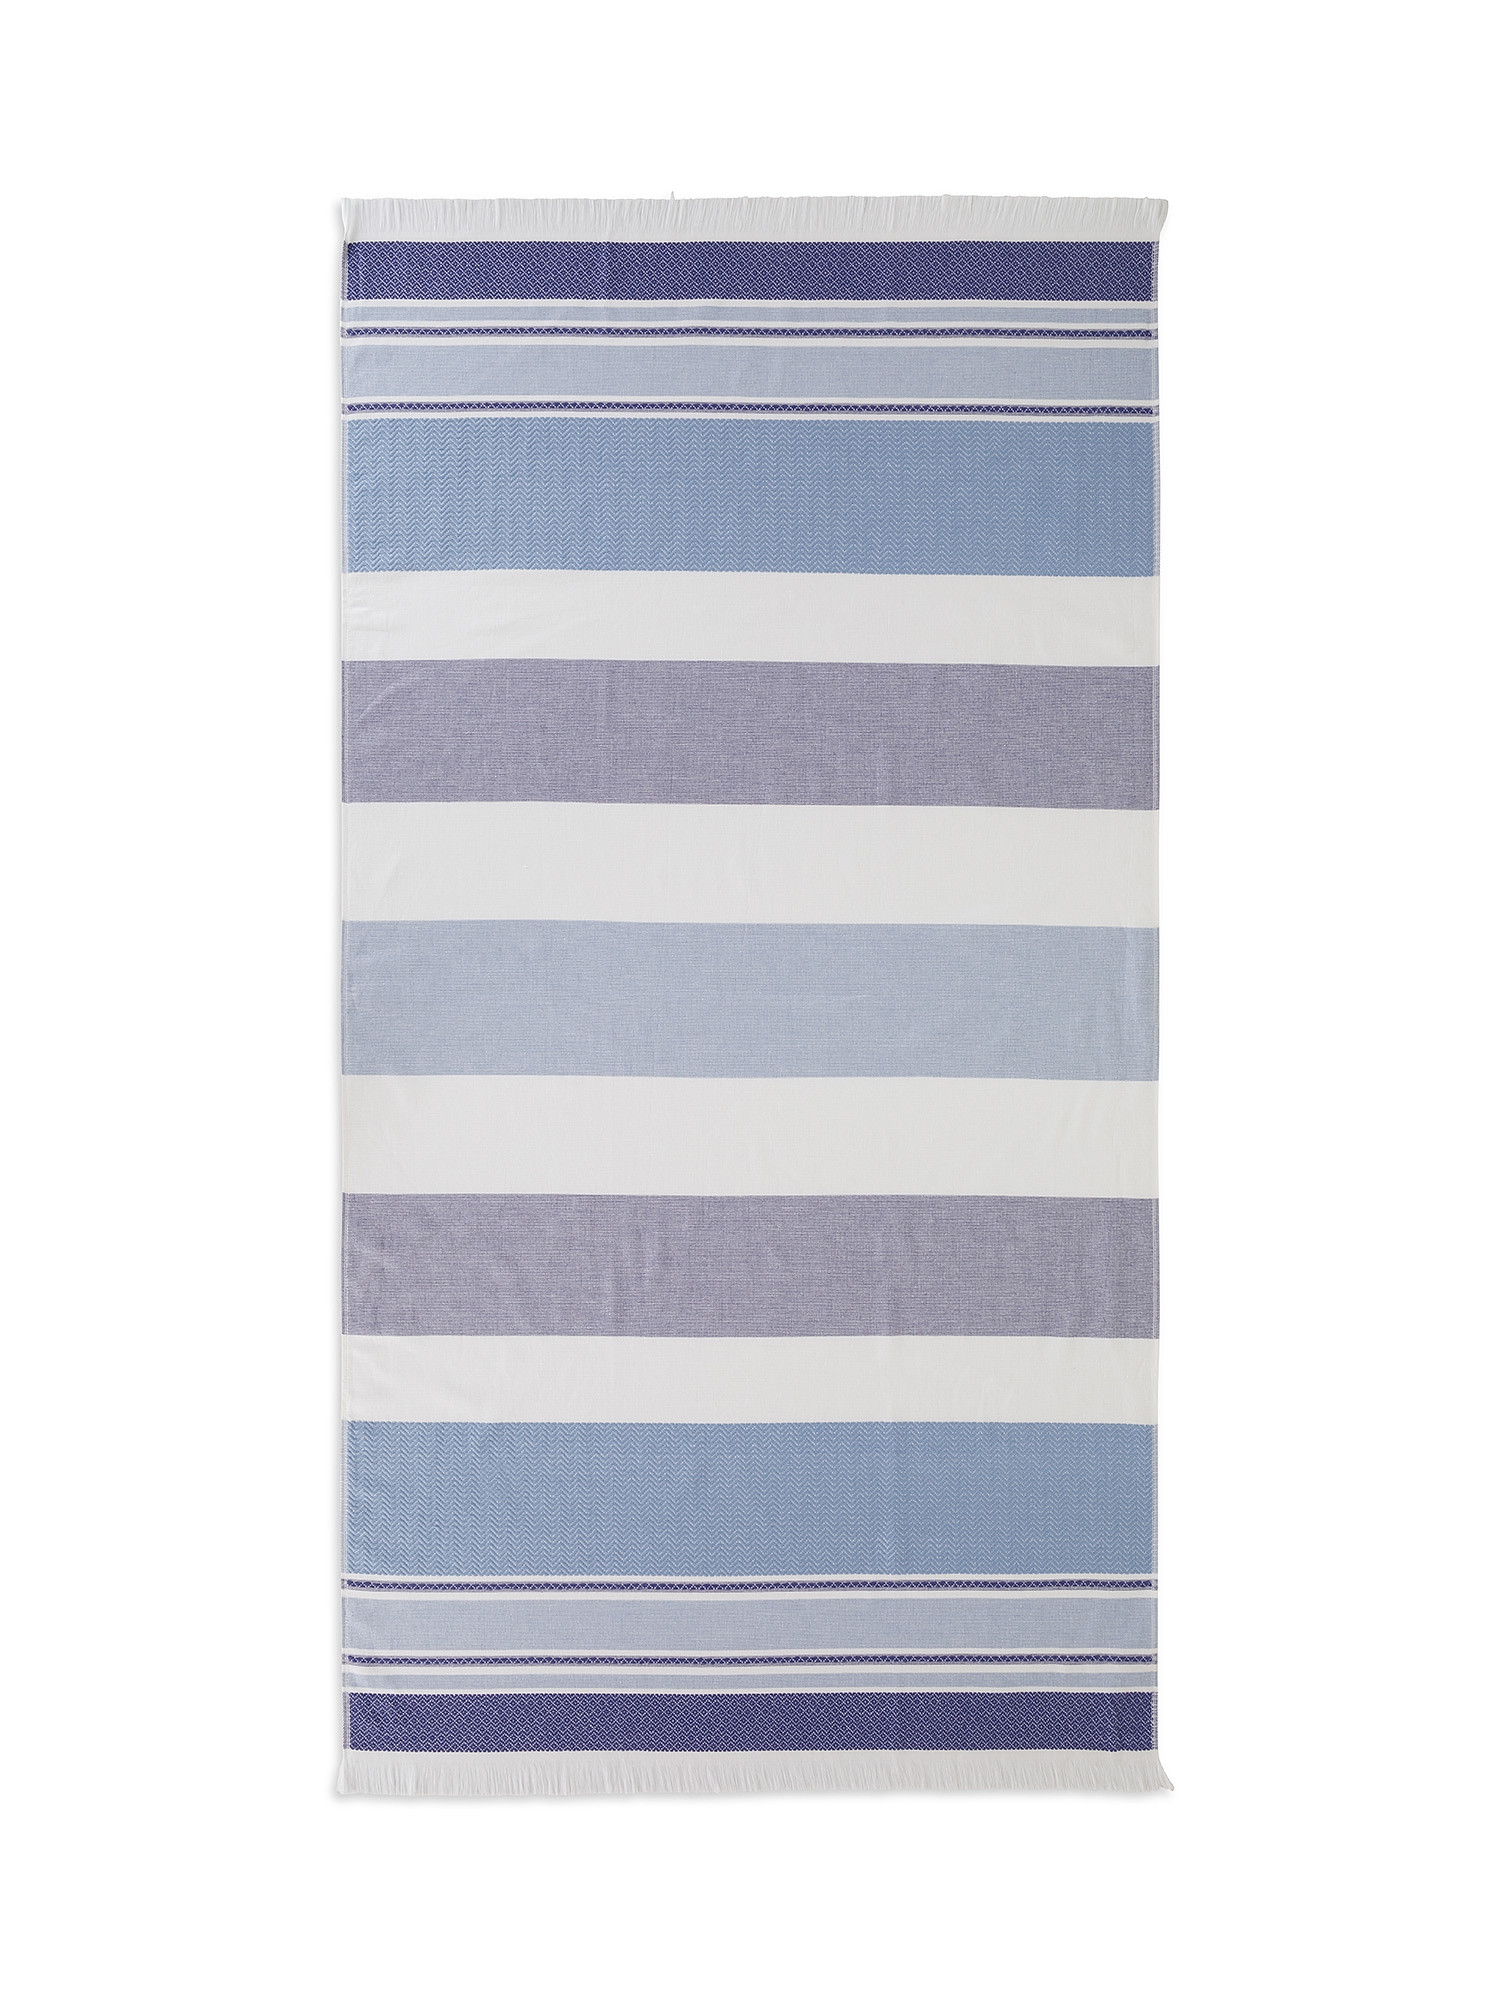 Striped jacquard cotton hammam beach towel, Blue, large image number 0